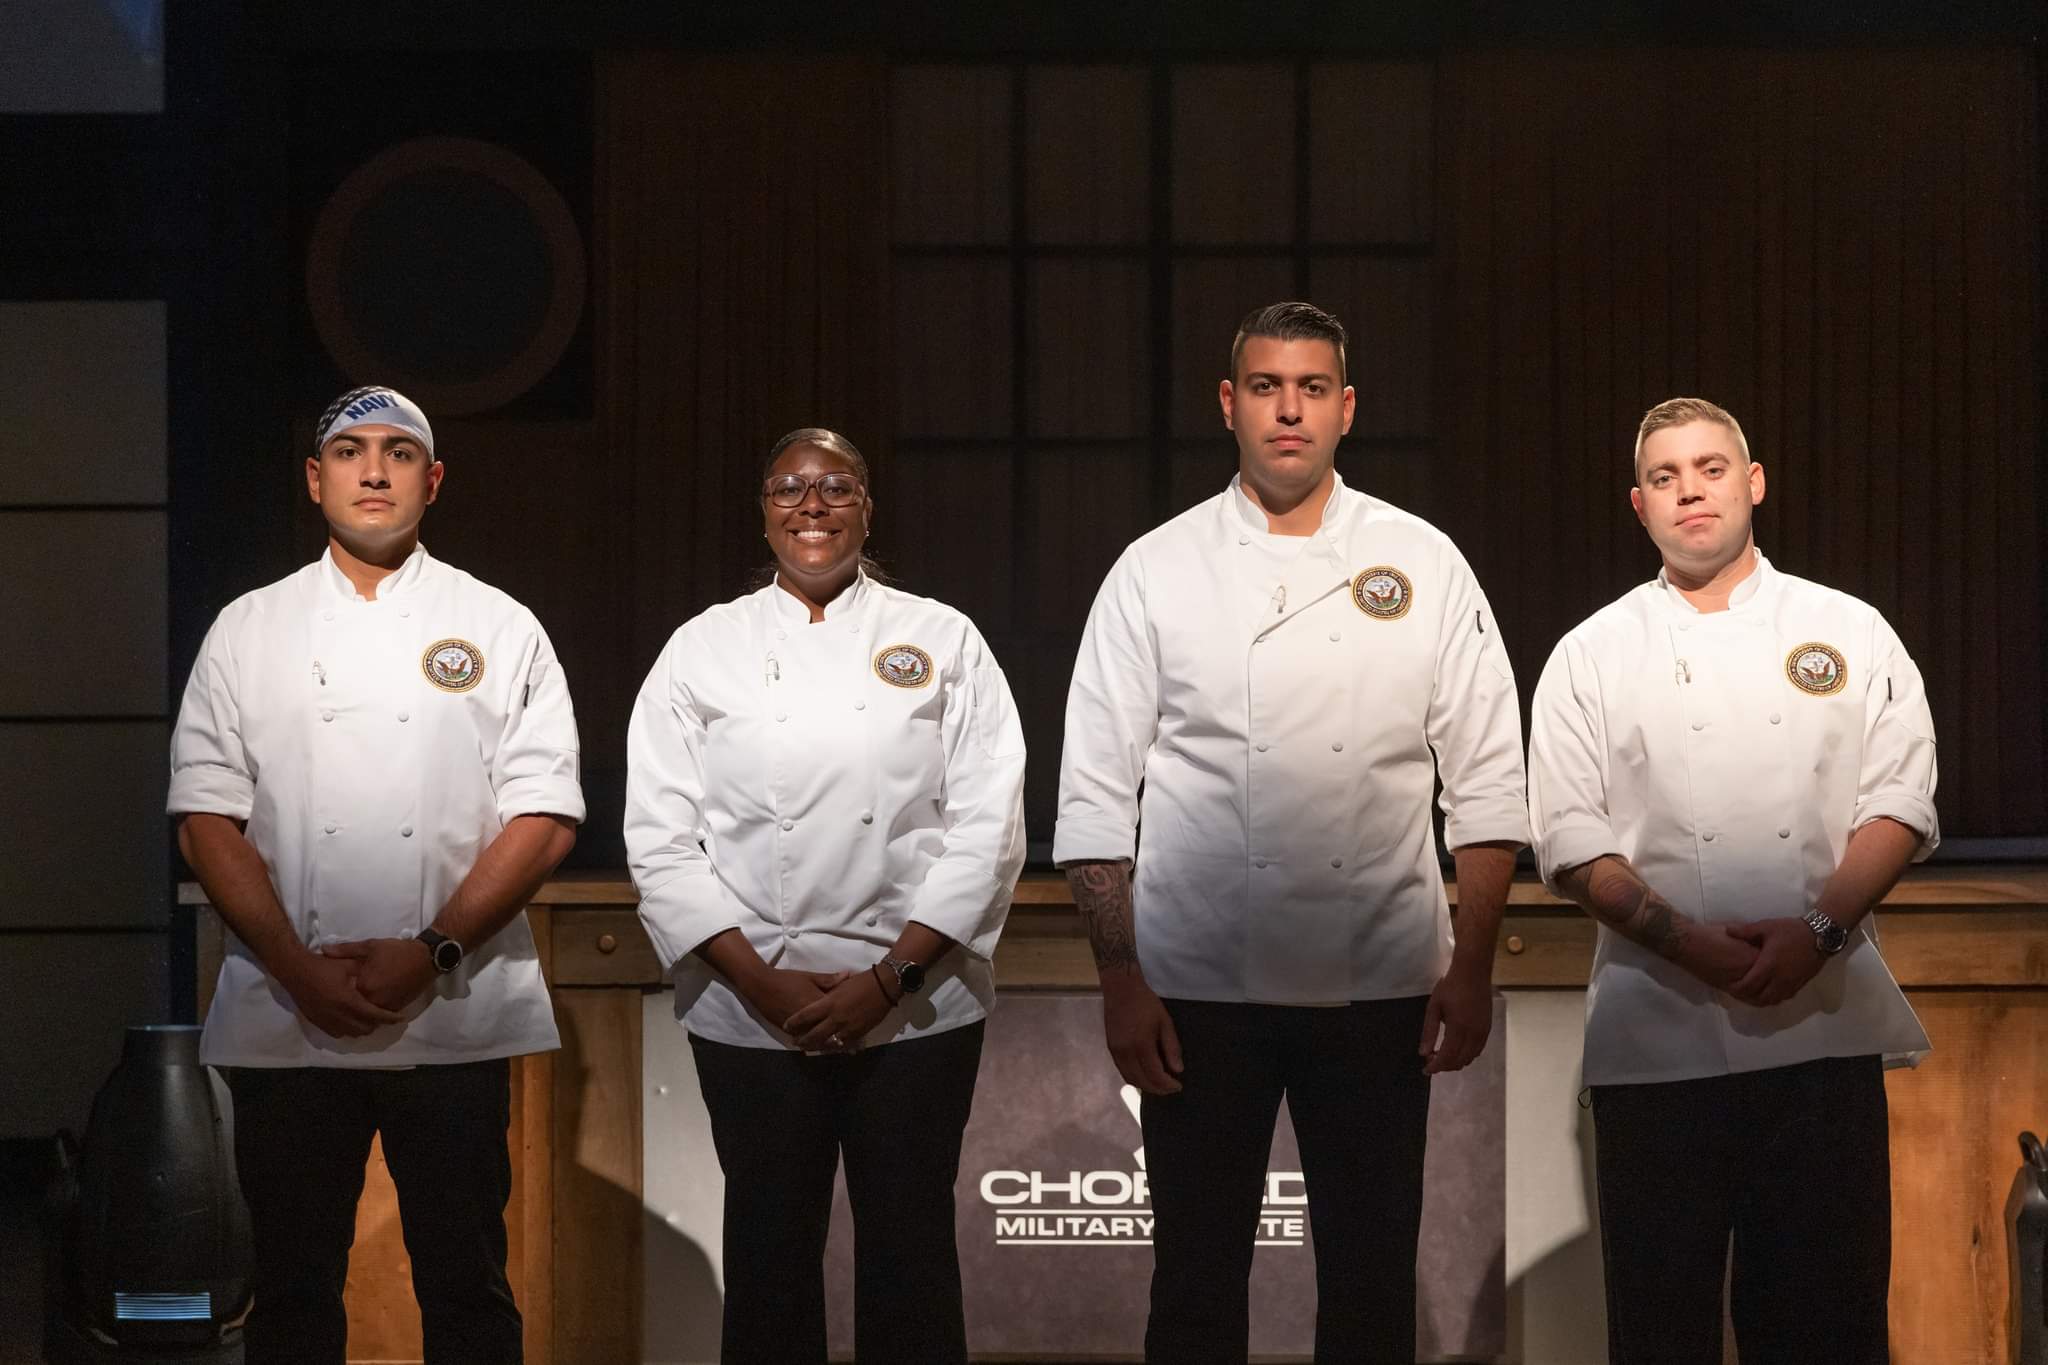 Chopped Kitchen's military chef contestants.